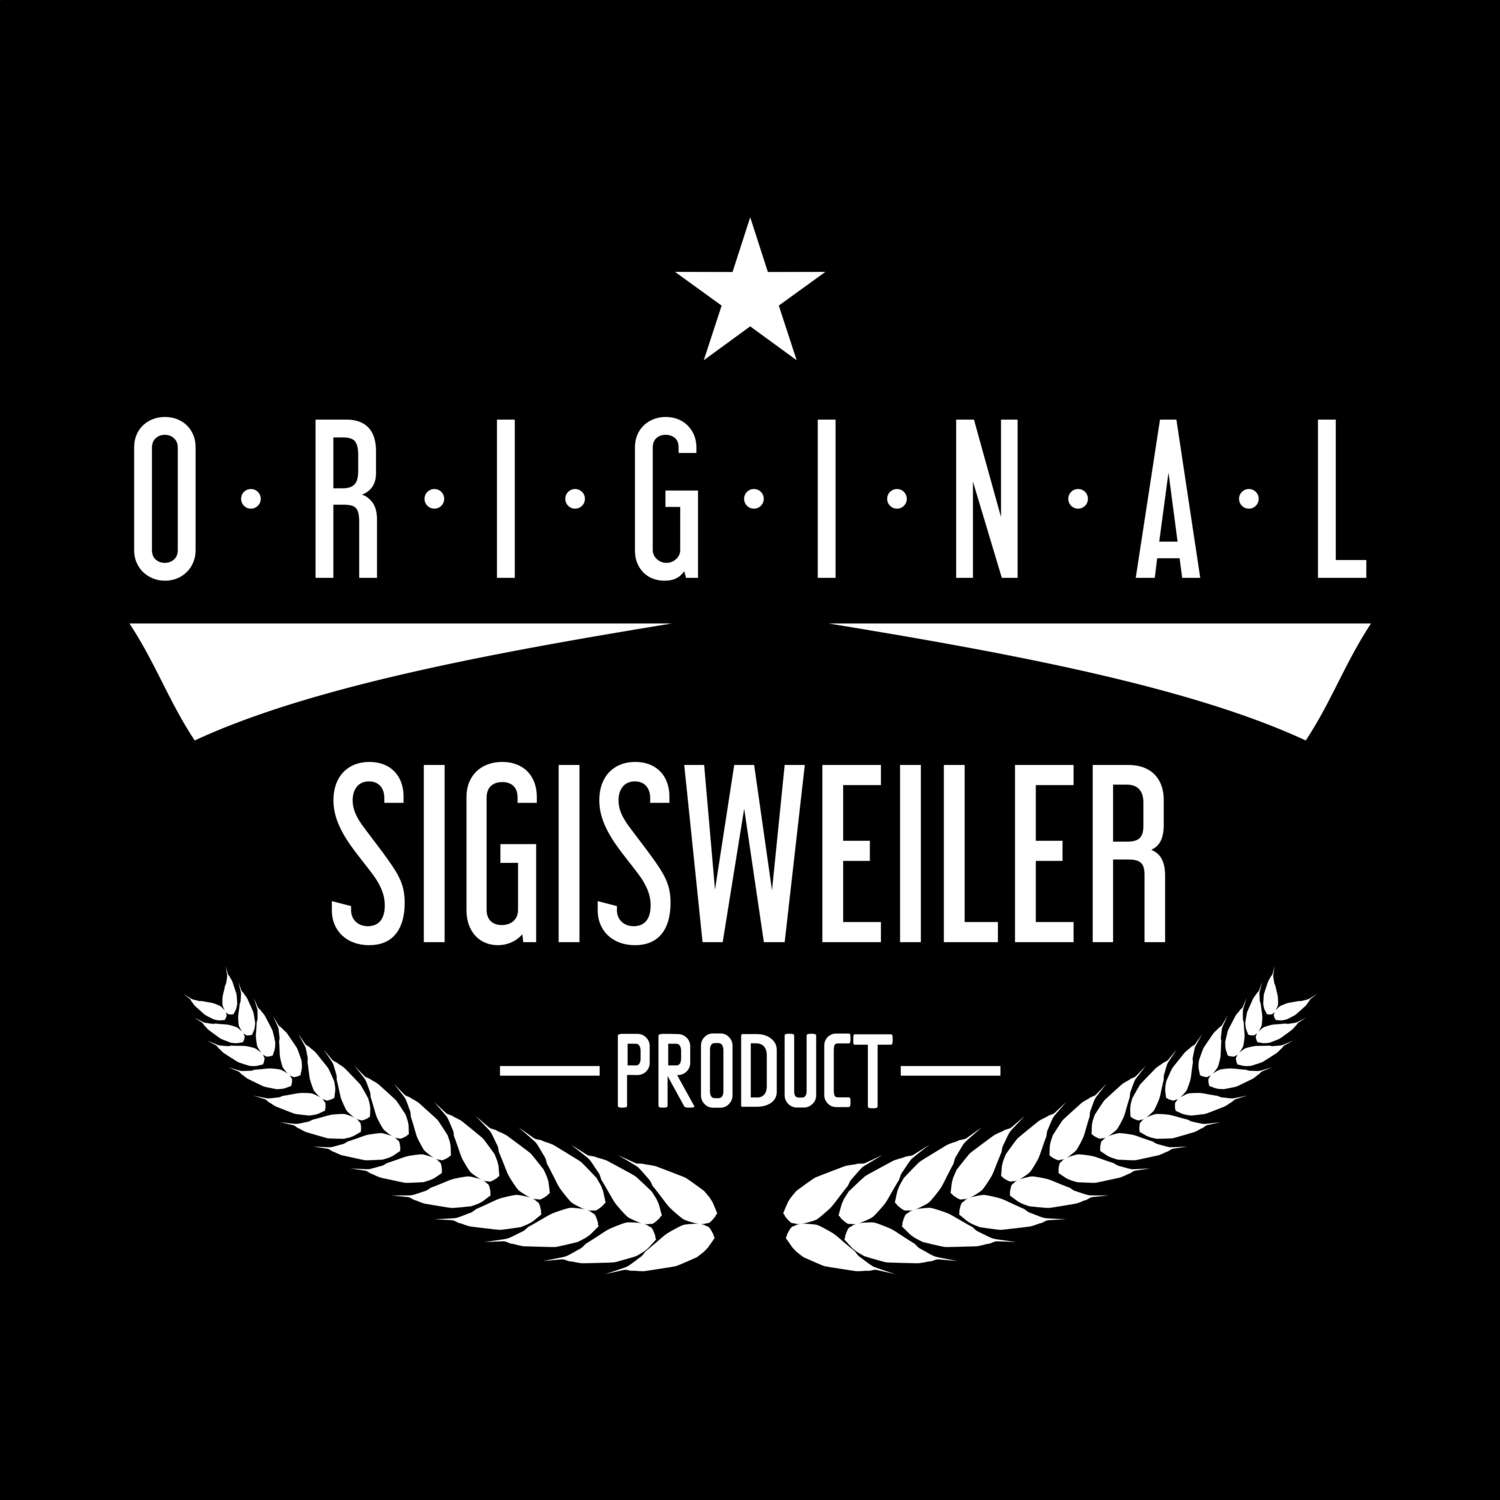 Sigisweiler T-Shirt »Original Product«